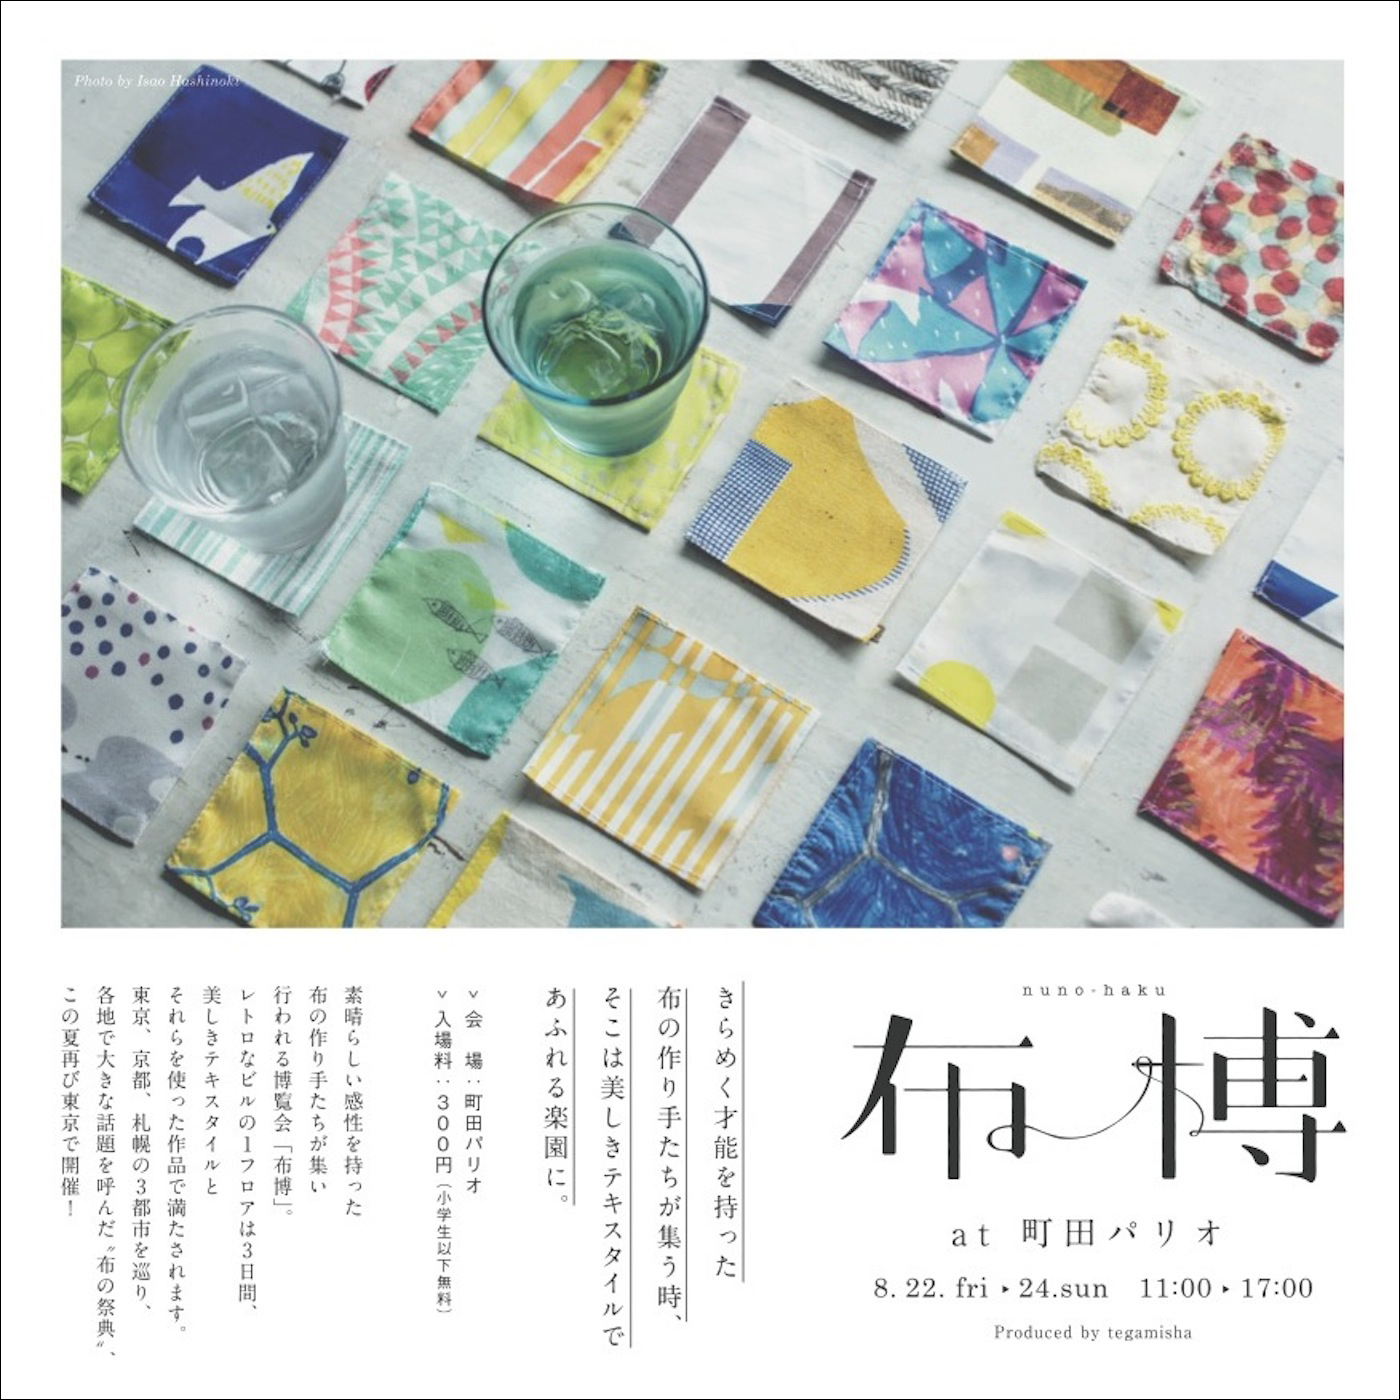 http://www.ao-daikanyama.com/information/upimg/flyer-pario-2014.jpg